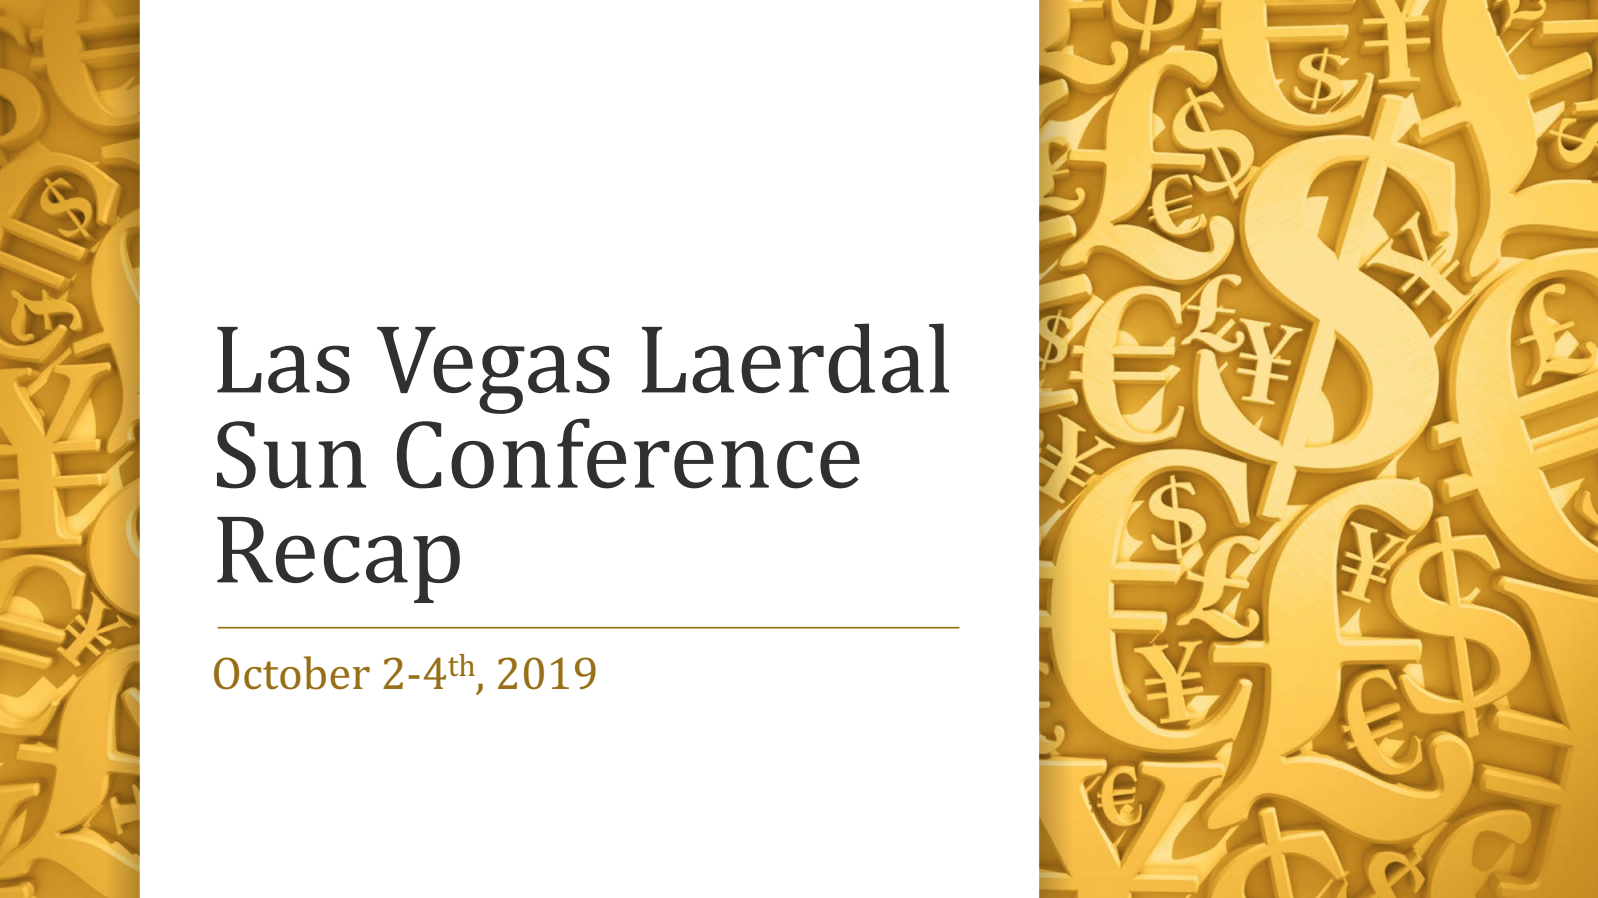 Las Vegas Laerdal SUN Conference 2019